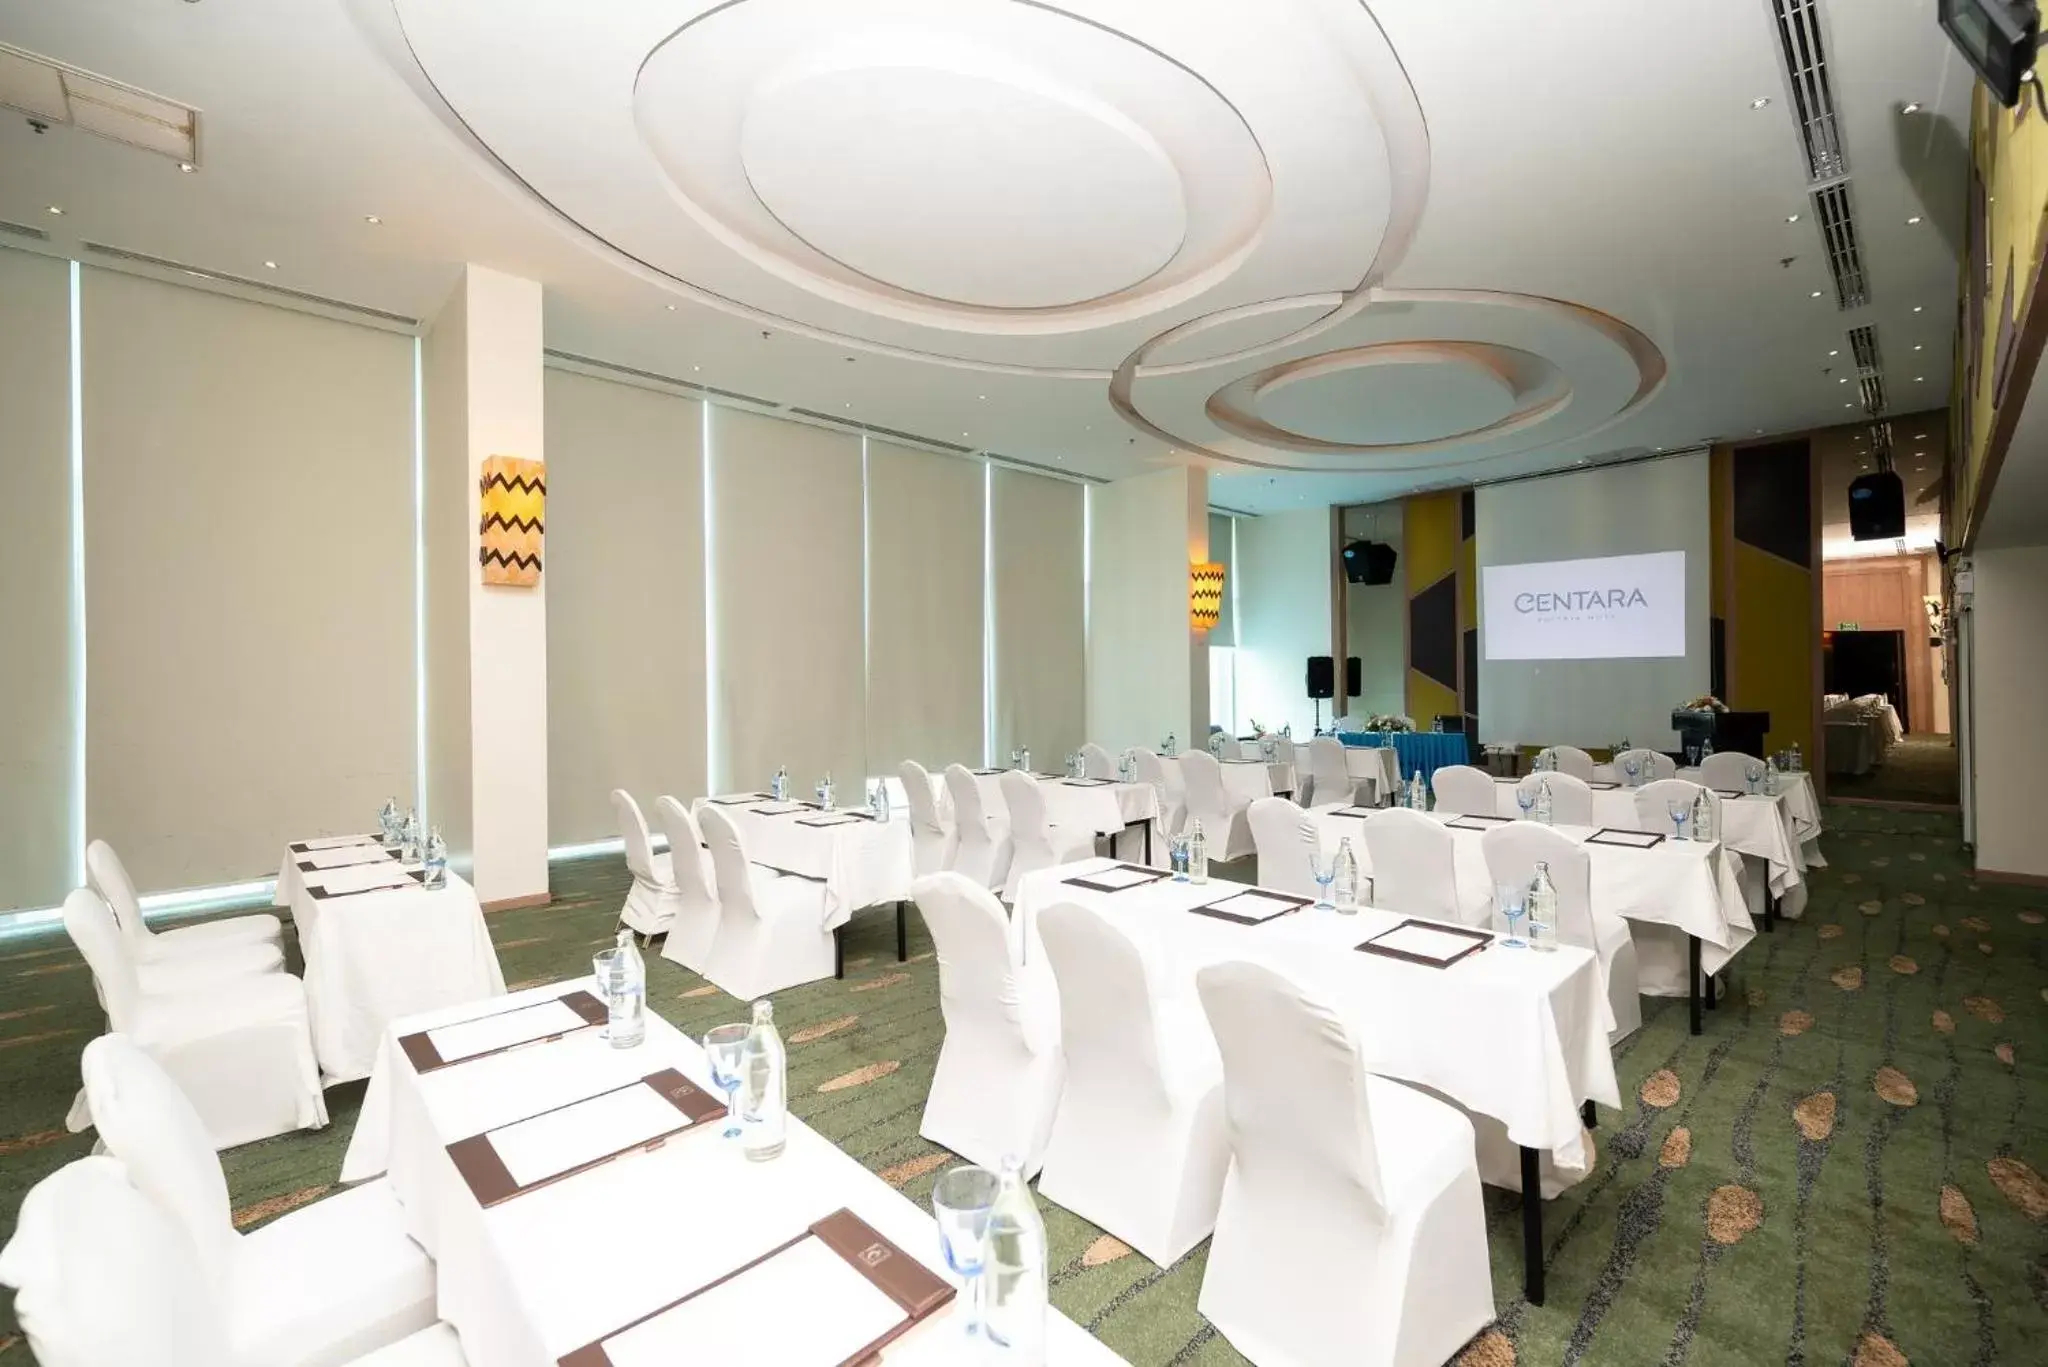 Banquet/Function facilities in Centara Pattaya Hotel